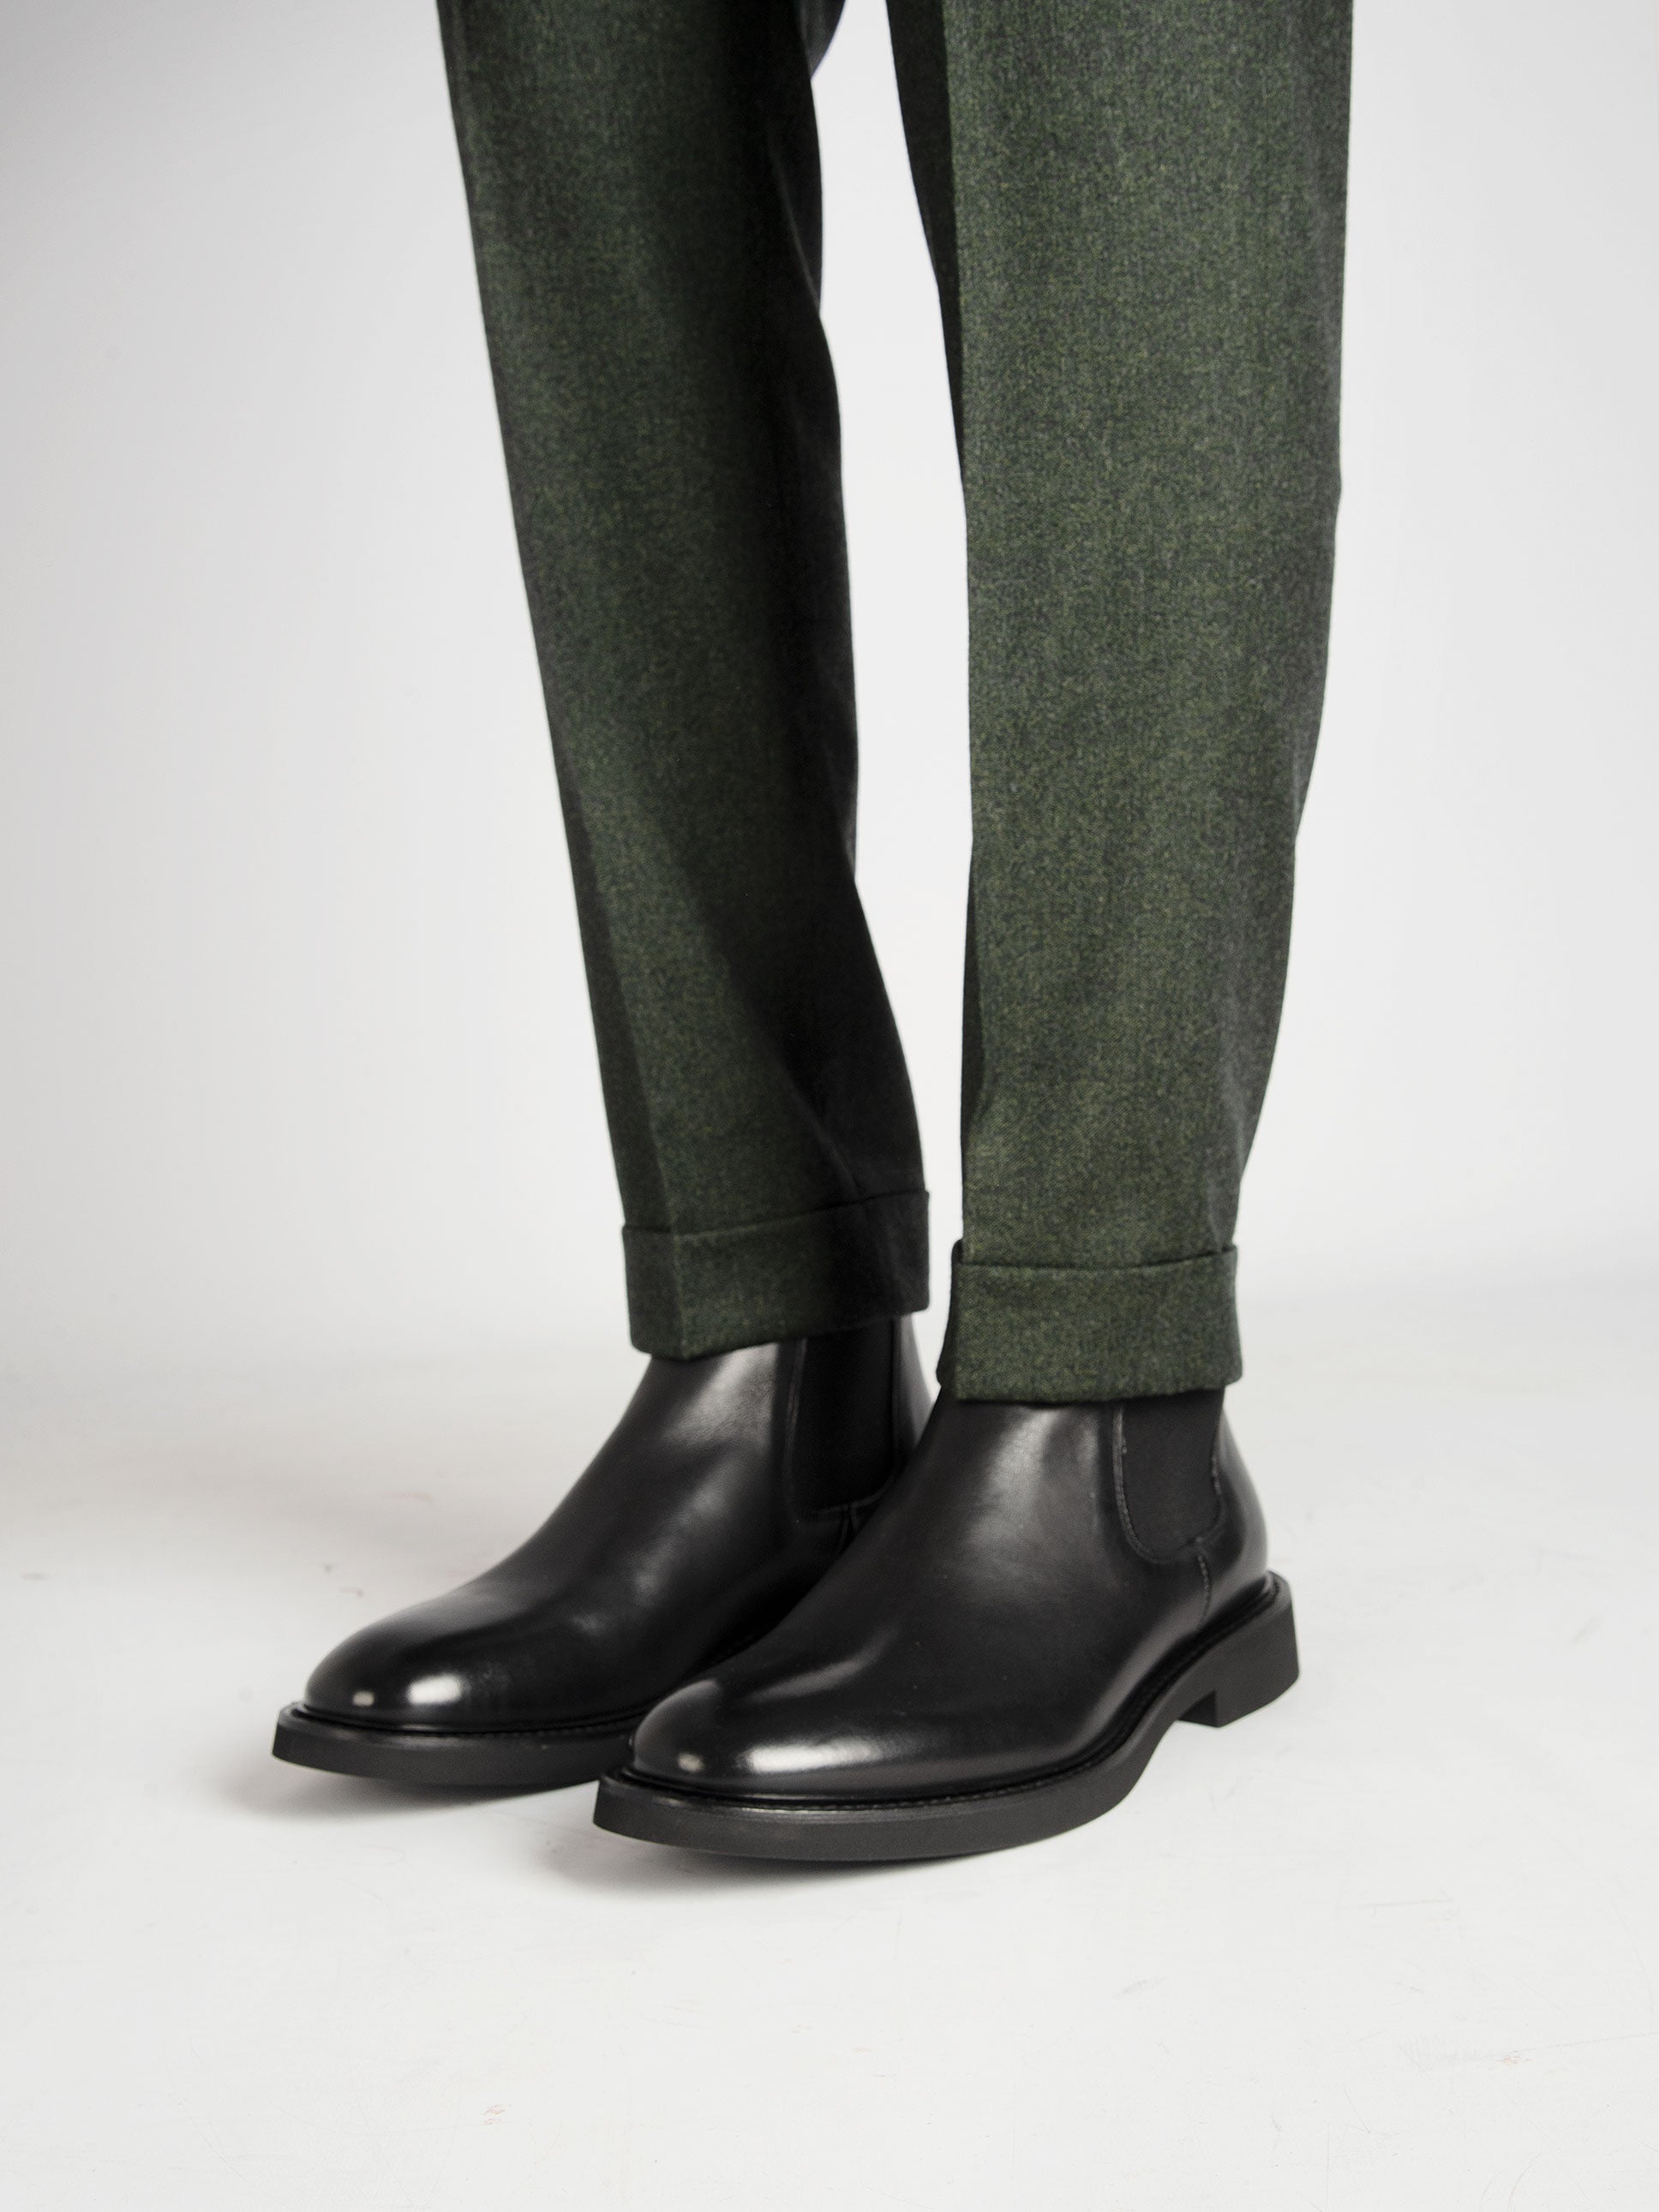 Pantalone Retro - Verde